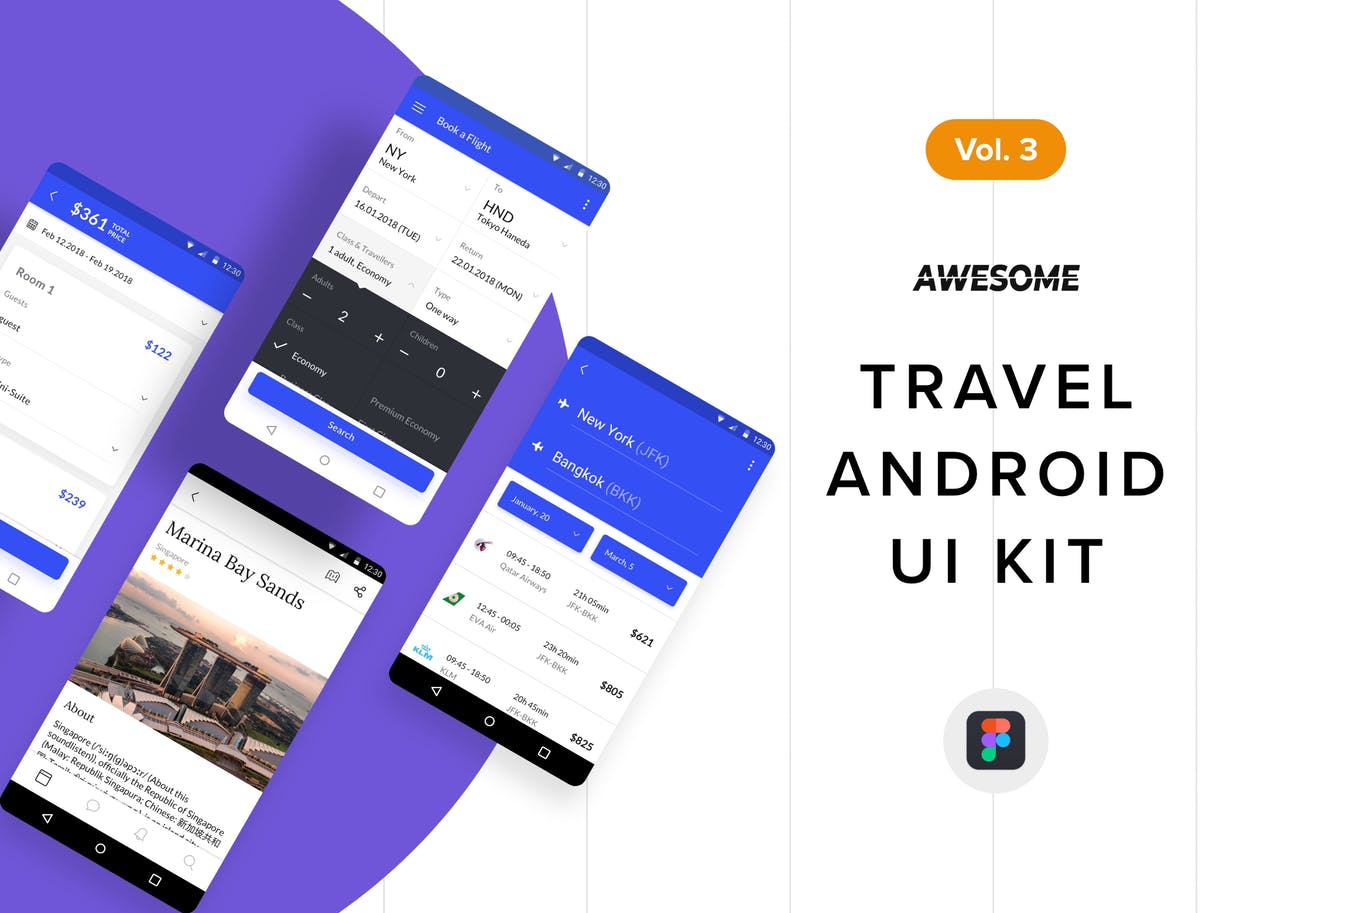 安卓手机平台旅游APP应用UI设计套件v3[Figma] Android UI Kit – Travel Vol. 3 (Figma)插图